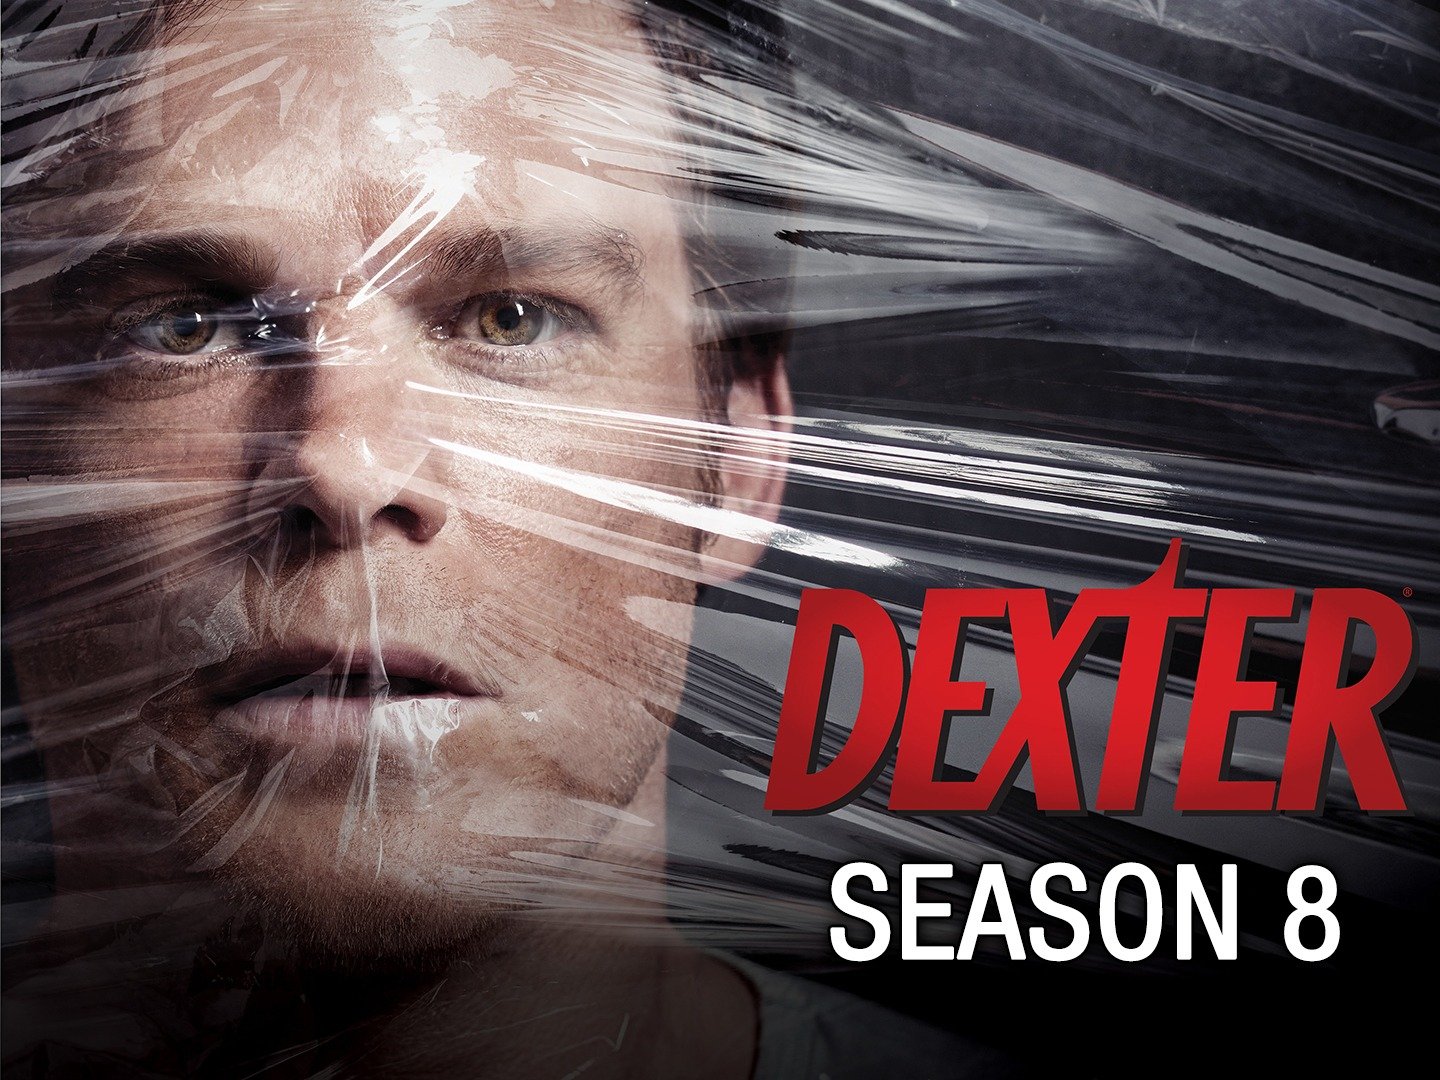 Does dexter cry when debra dies?